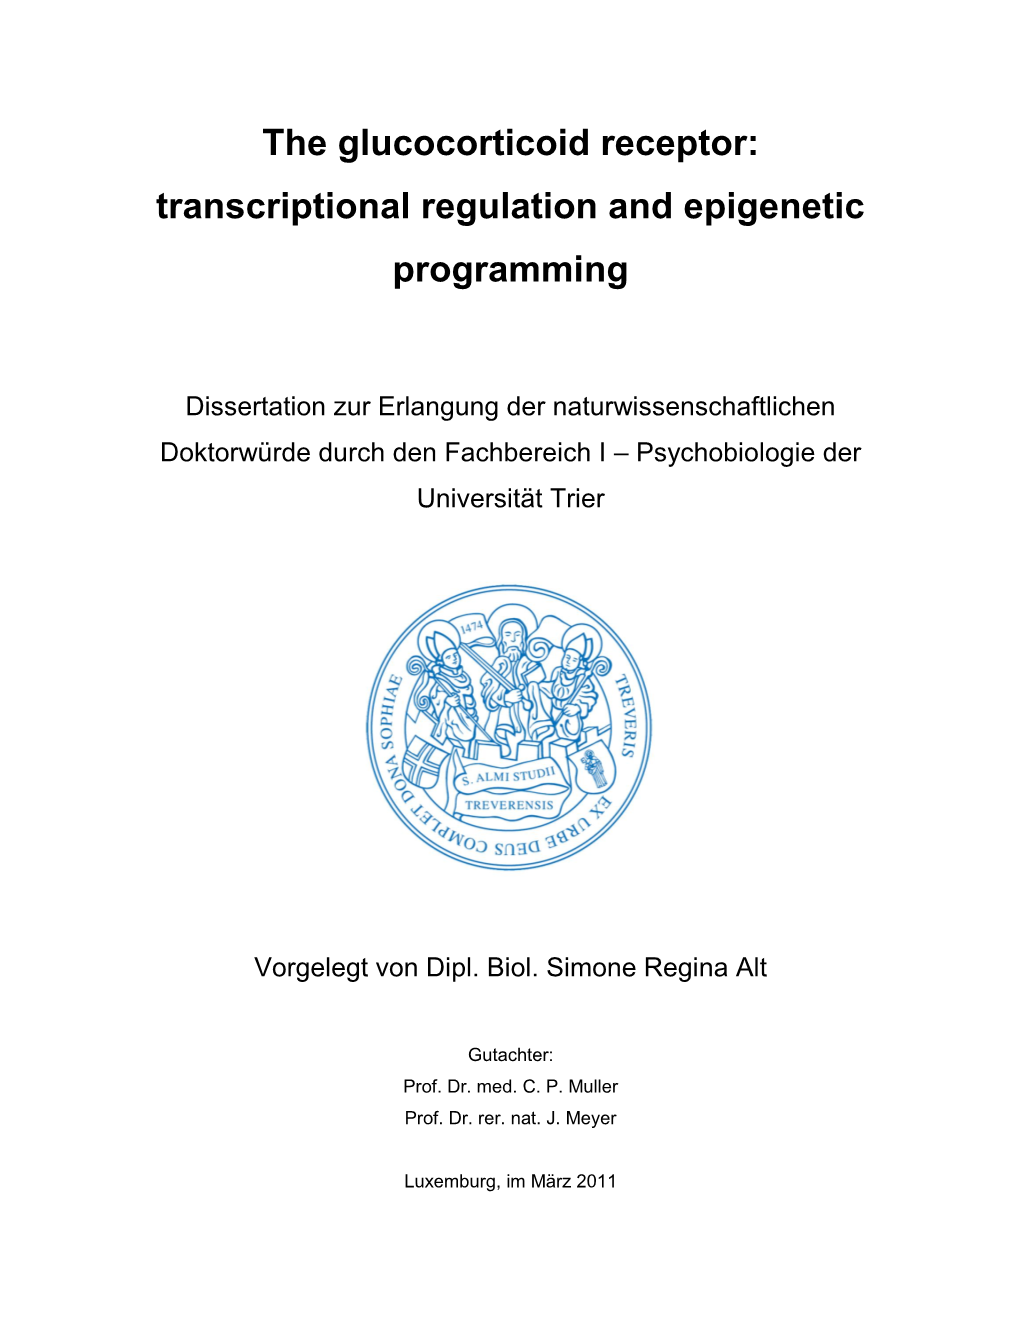 The Glucocorticoid Receptor: Transcriptional Regulation and Epigenetic Programming